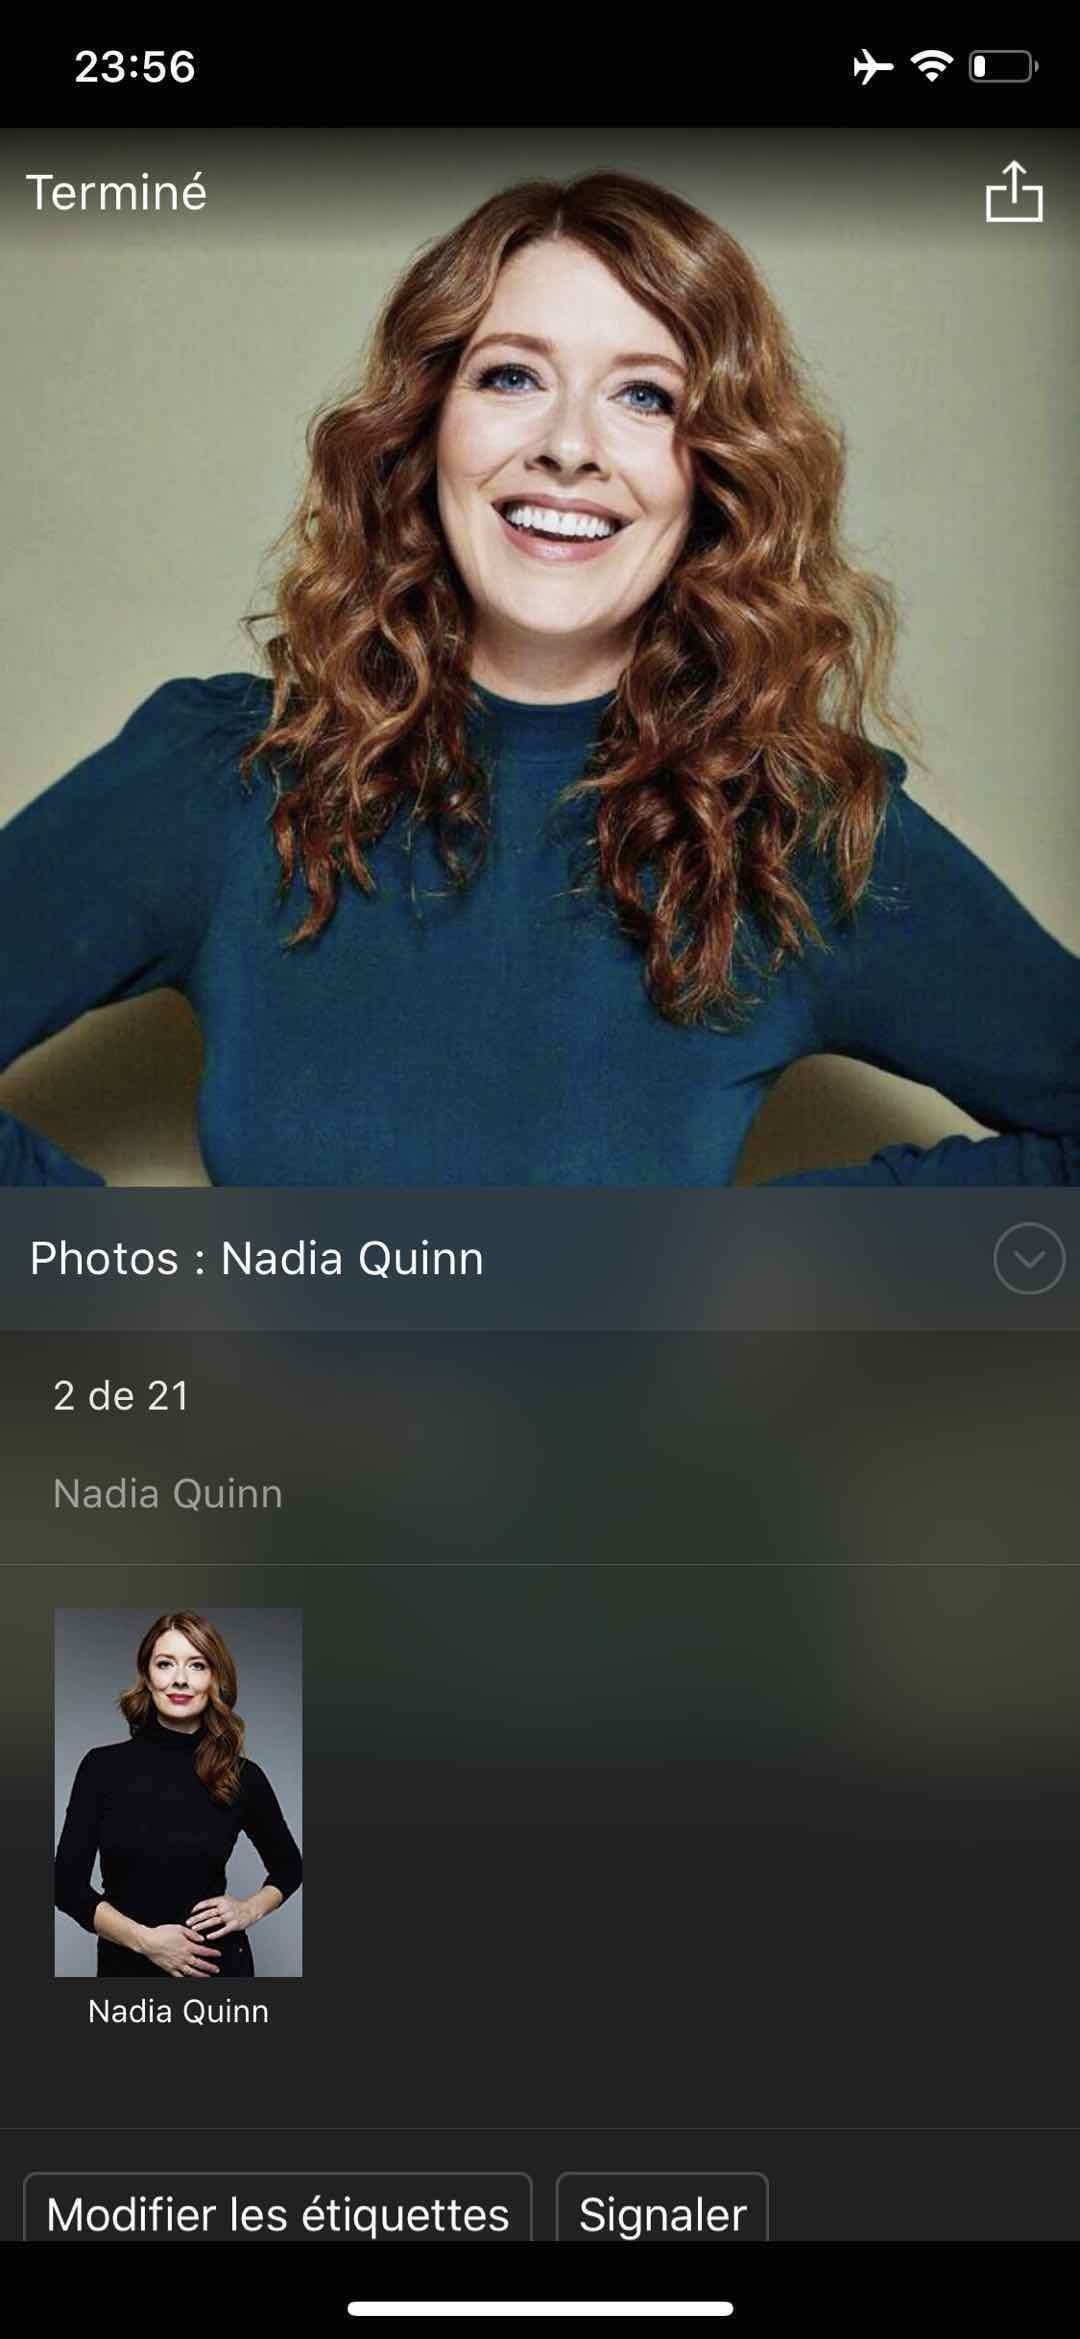 纳蒂亚·奎恩 Nadia Quinn